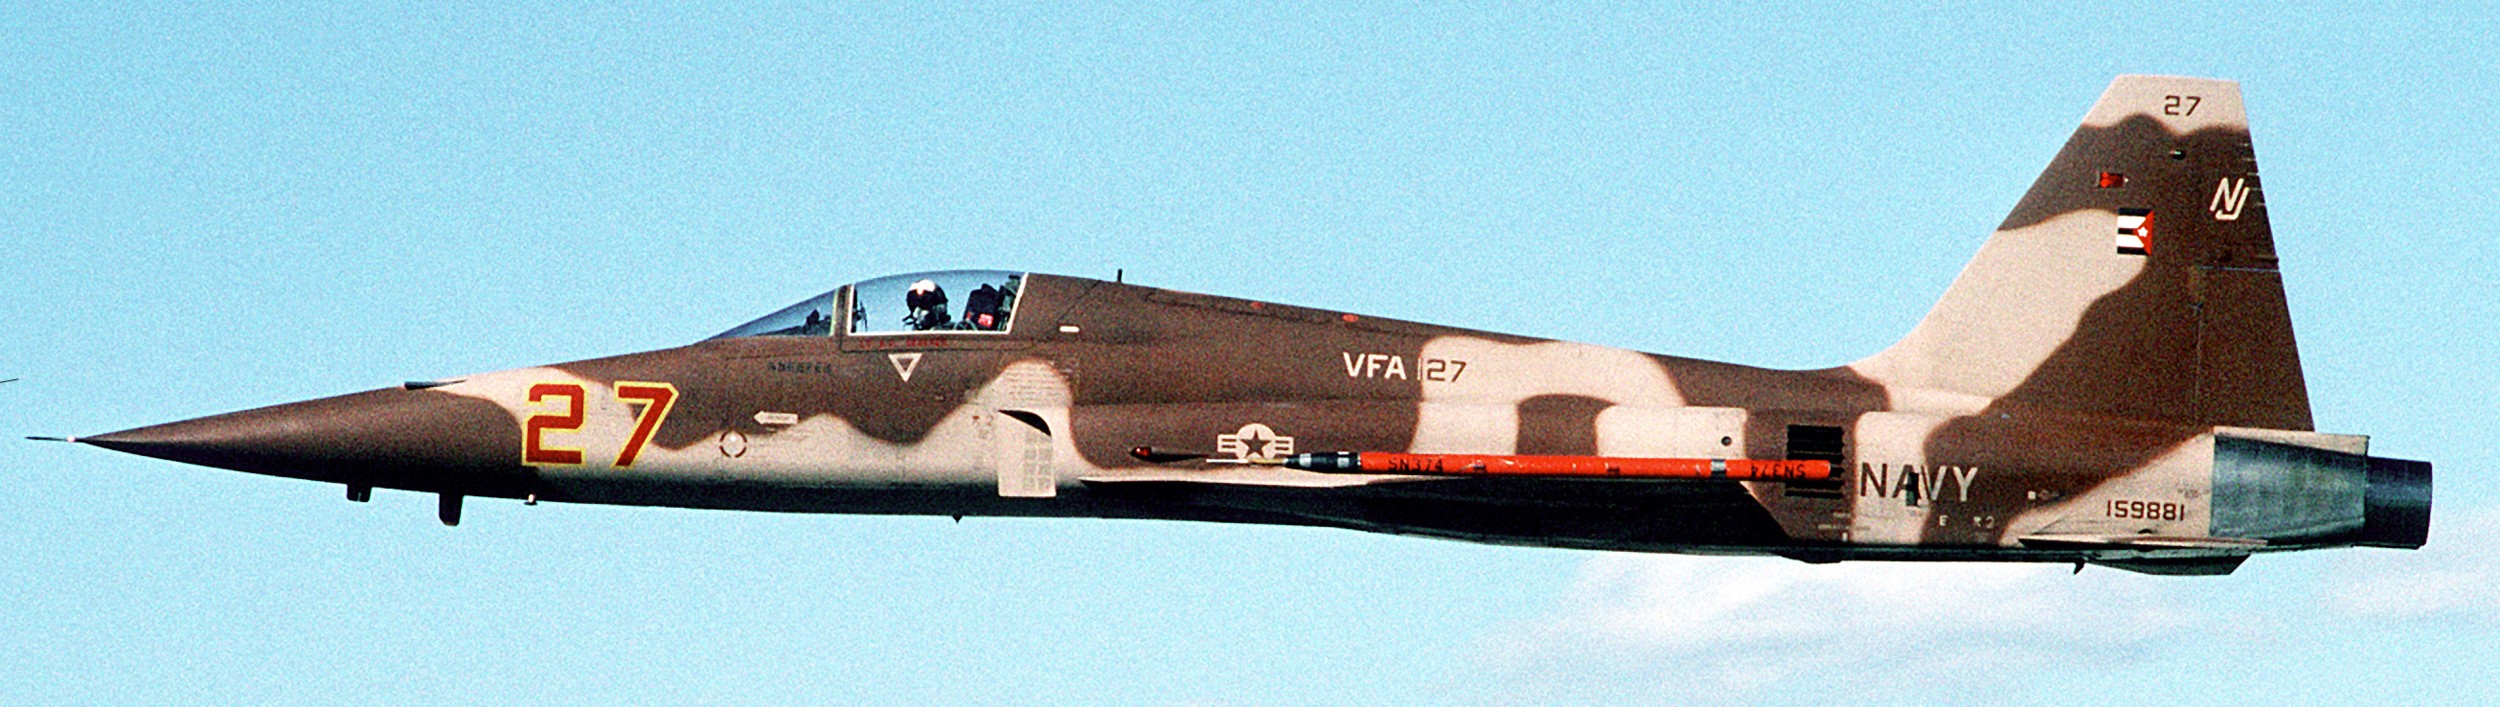 vfa-127 desert bogeys strike fighter squadron f-5e tiger 1993 25 nas fallon nevada